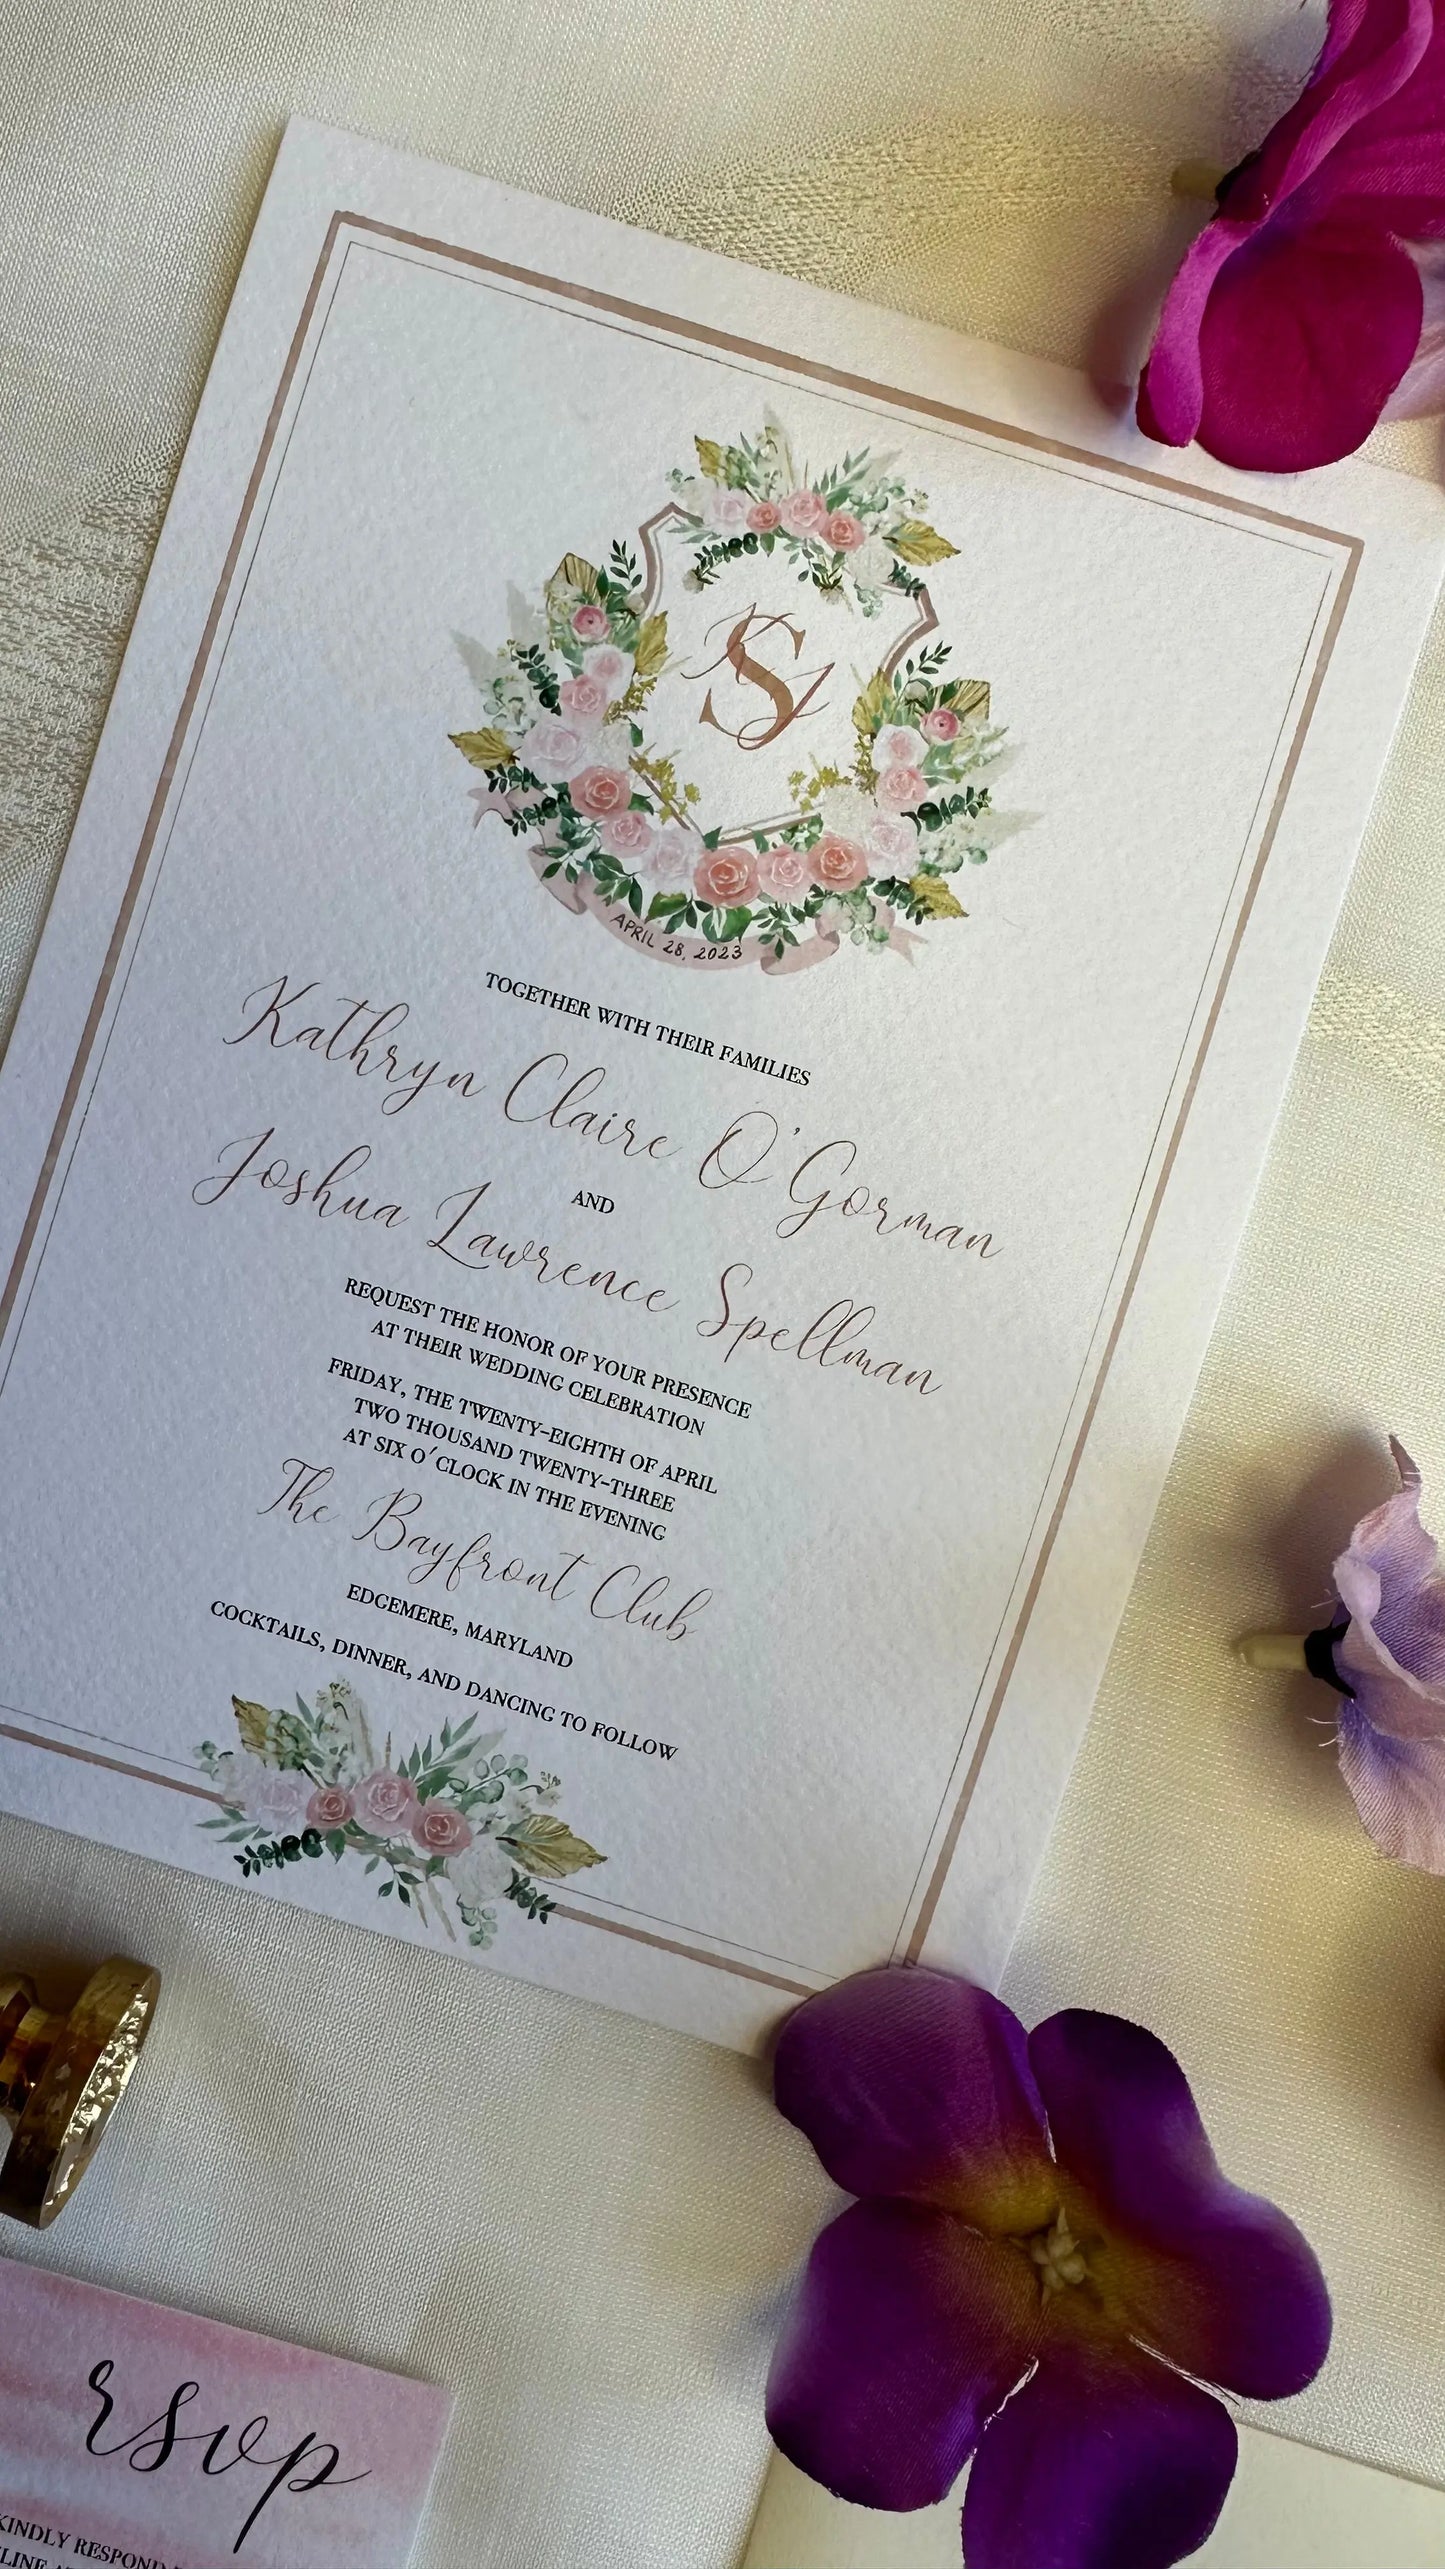 Custom Wedding invitation with custom wedding crest